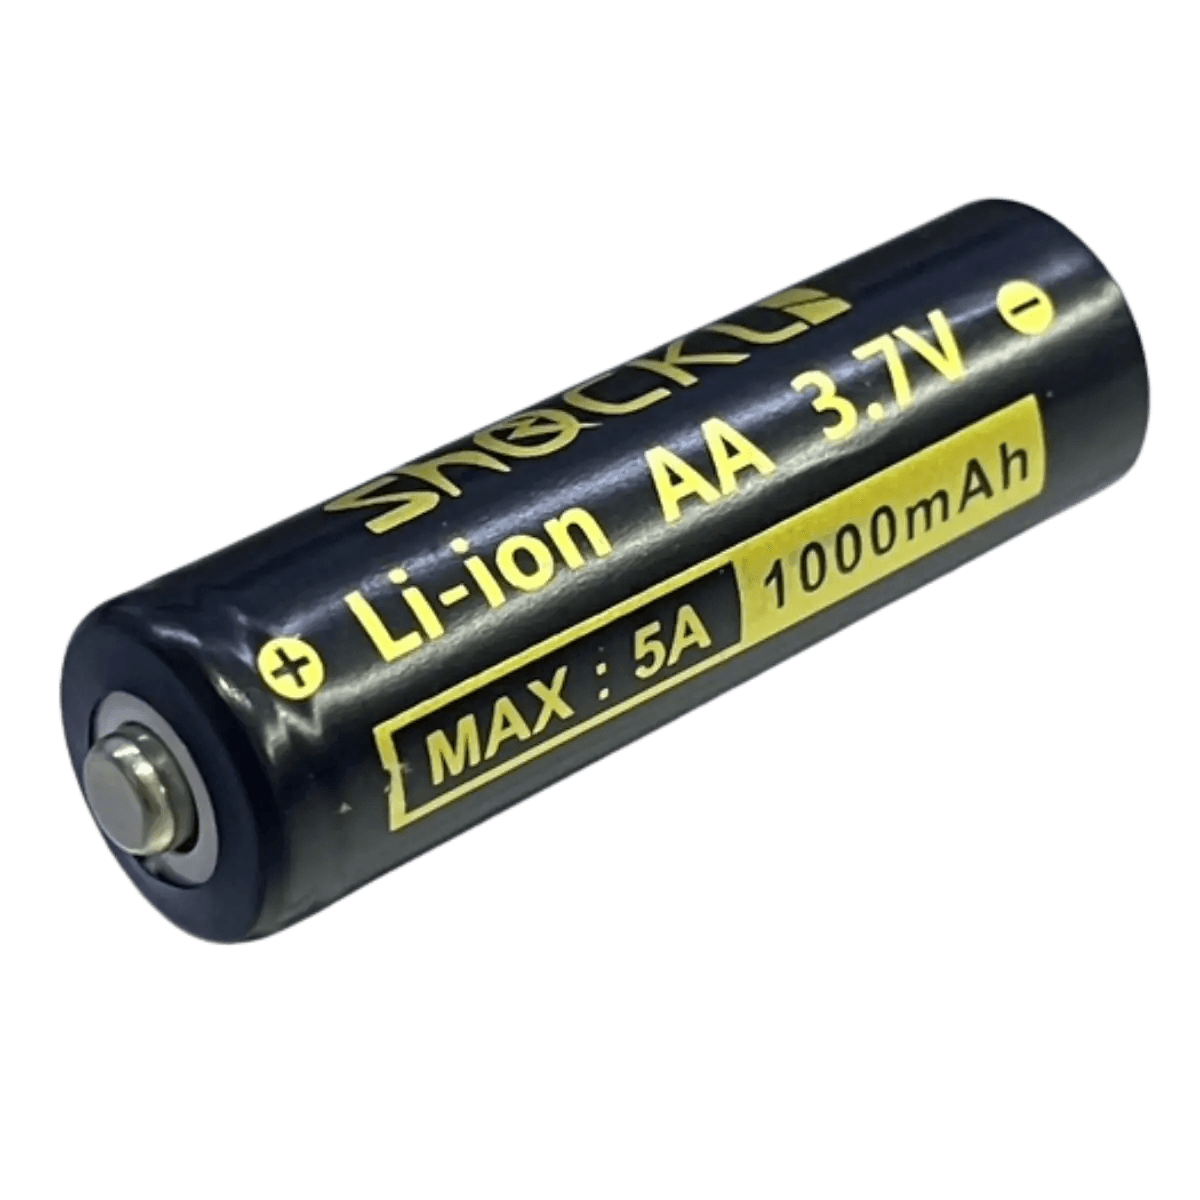 Piles Solaires rechargeables Lithium-Ion LifePo04 AA 800 Mah 3,2V LR06 pack  de 2